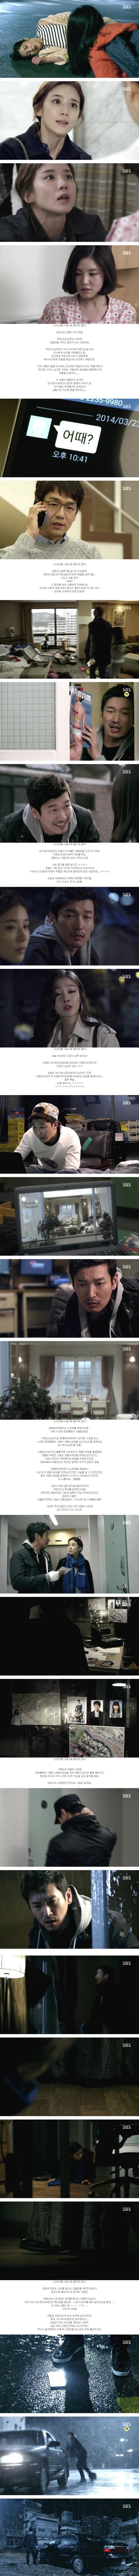 episode 8 captures for the Korean drama 'God's Gift - 14 Days'